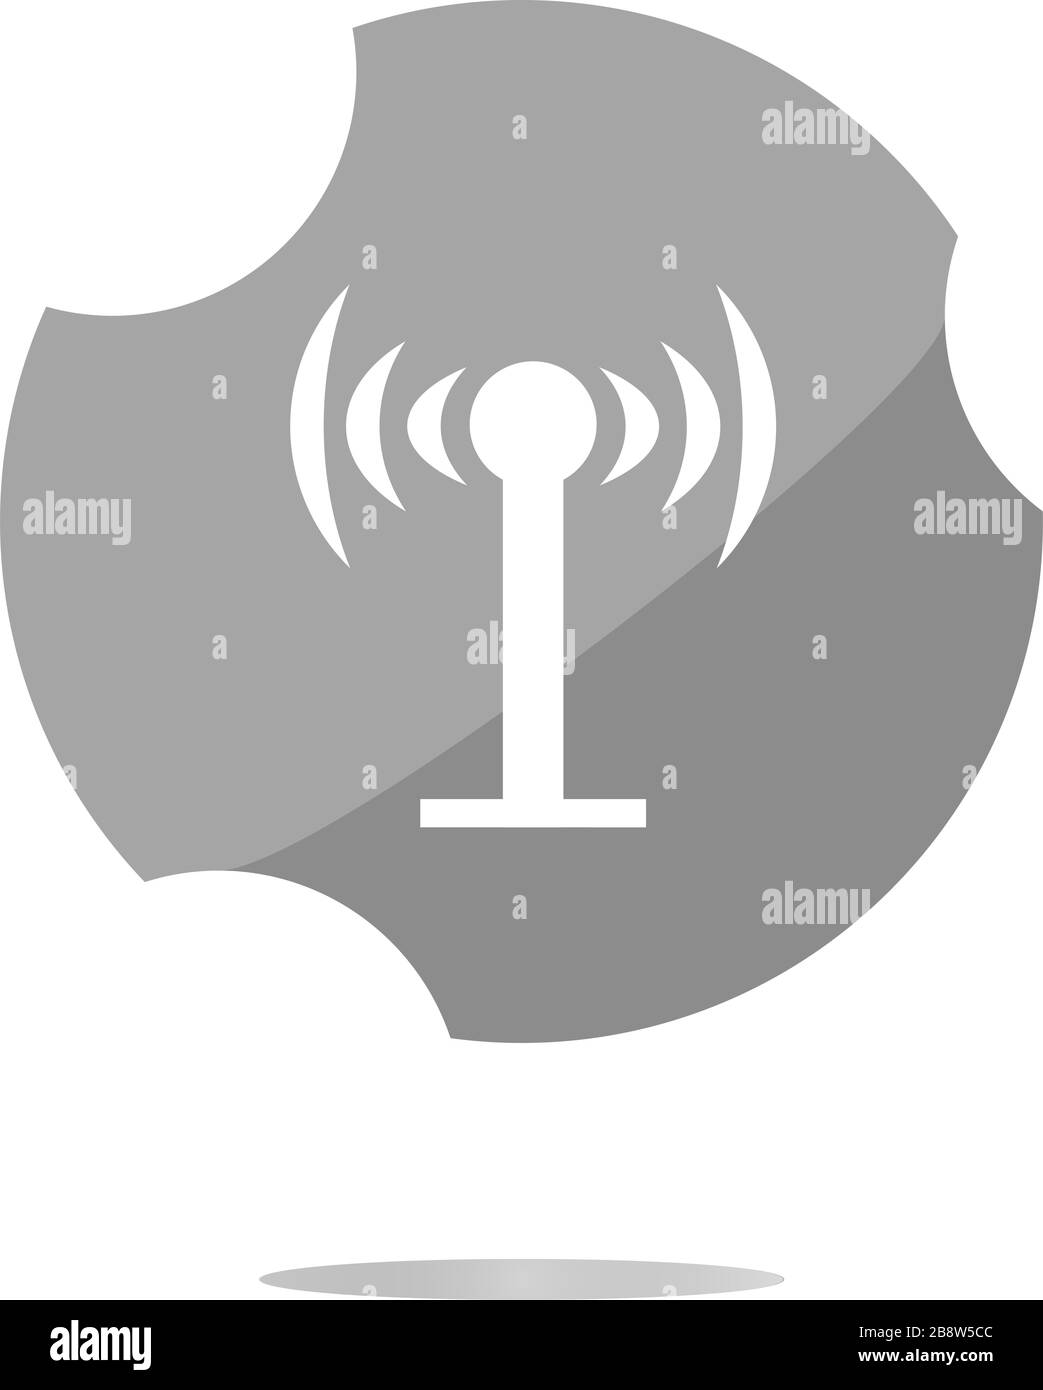 Wifi symbol icon (button) isolated on white background Stock Photo